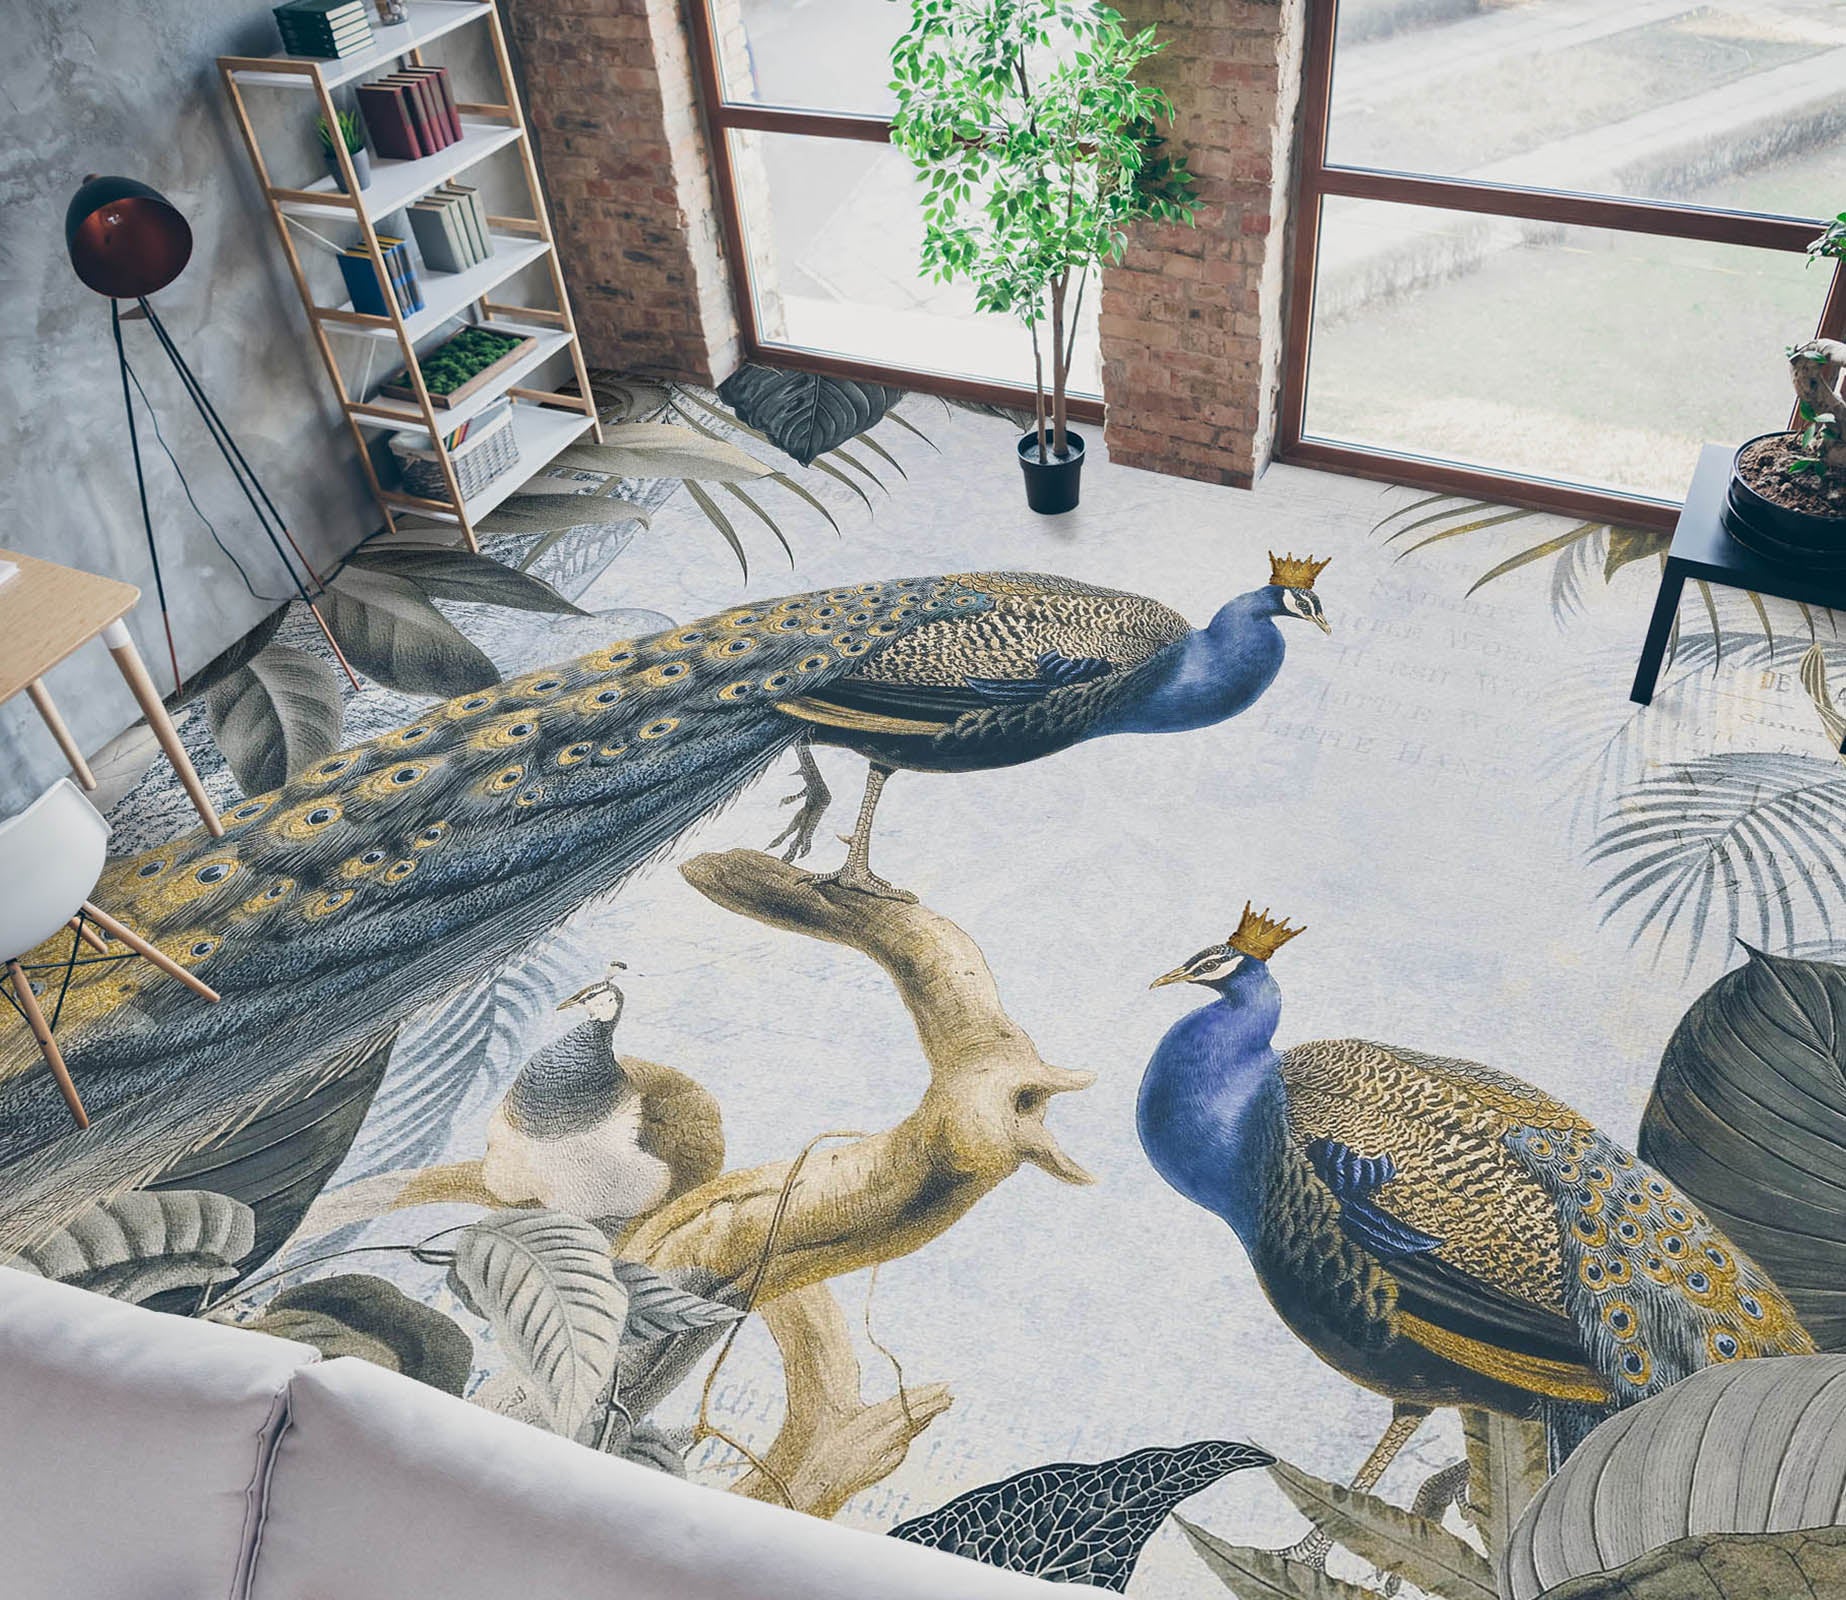 3D Peacock 104142 Andrea Haase Floor Mural  Wallpaper Murals Self-Adhesive Removable Print Epoxy